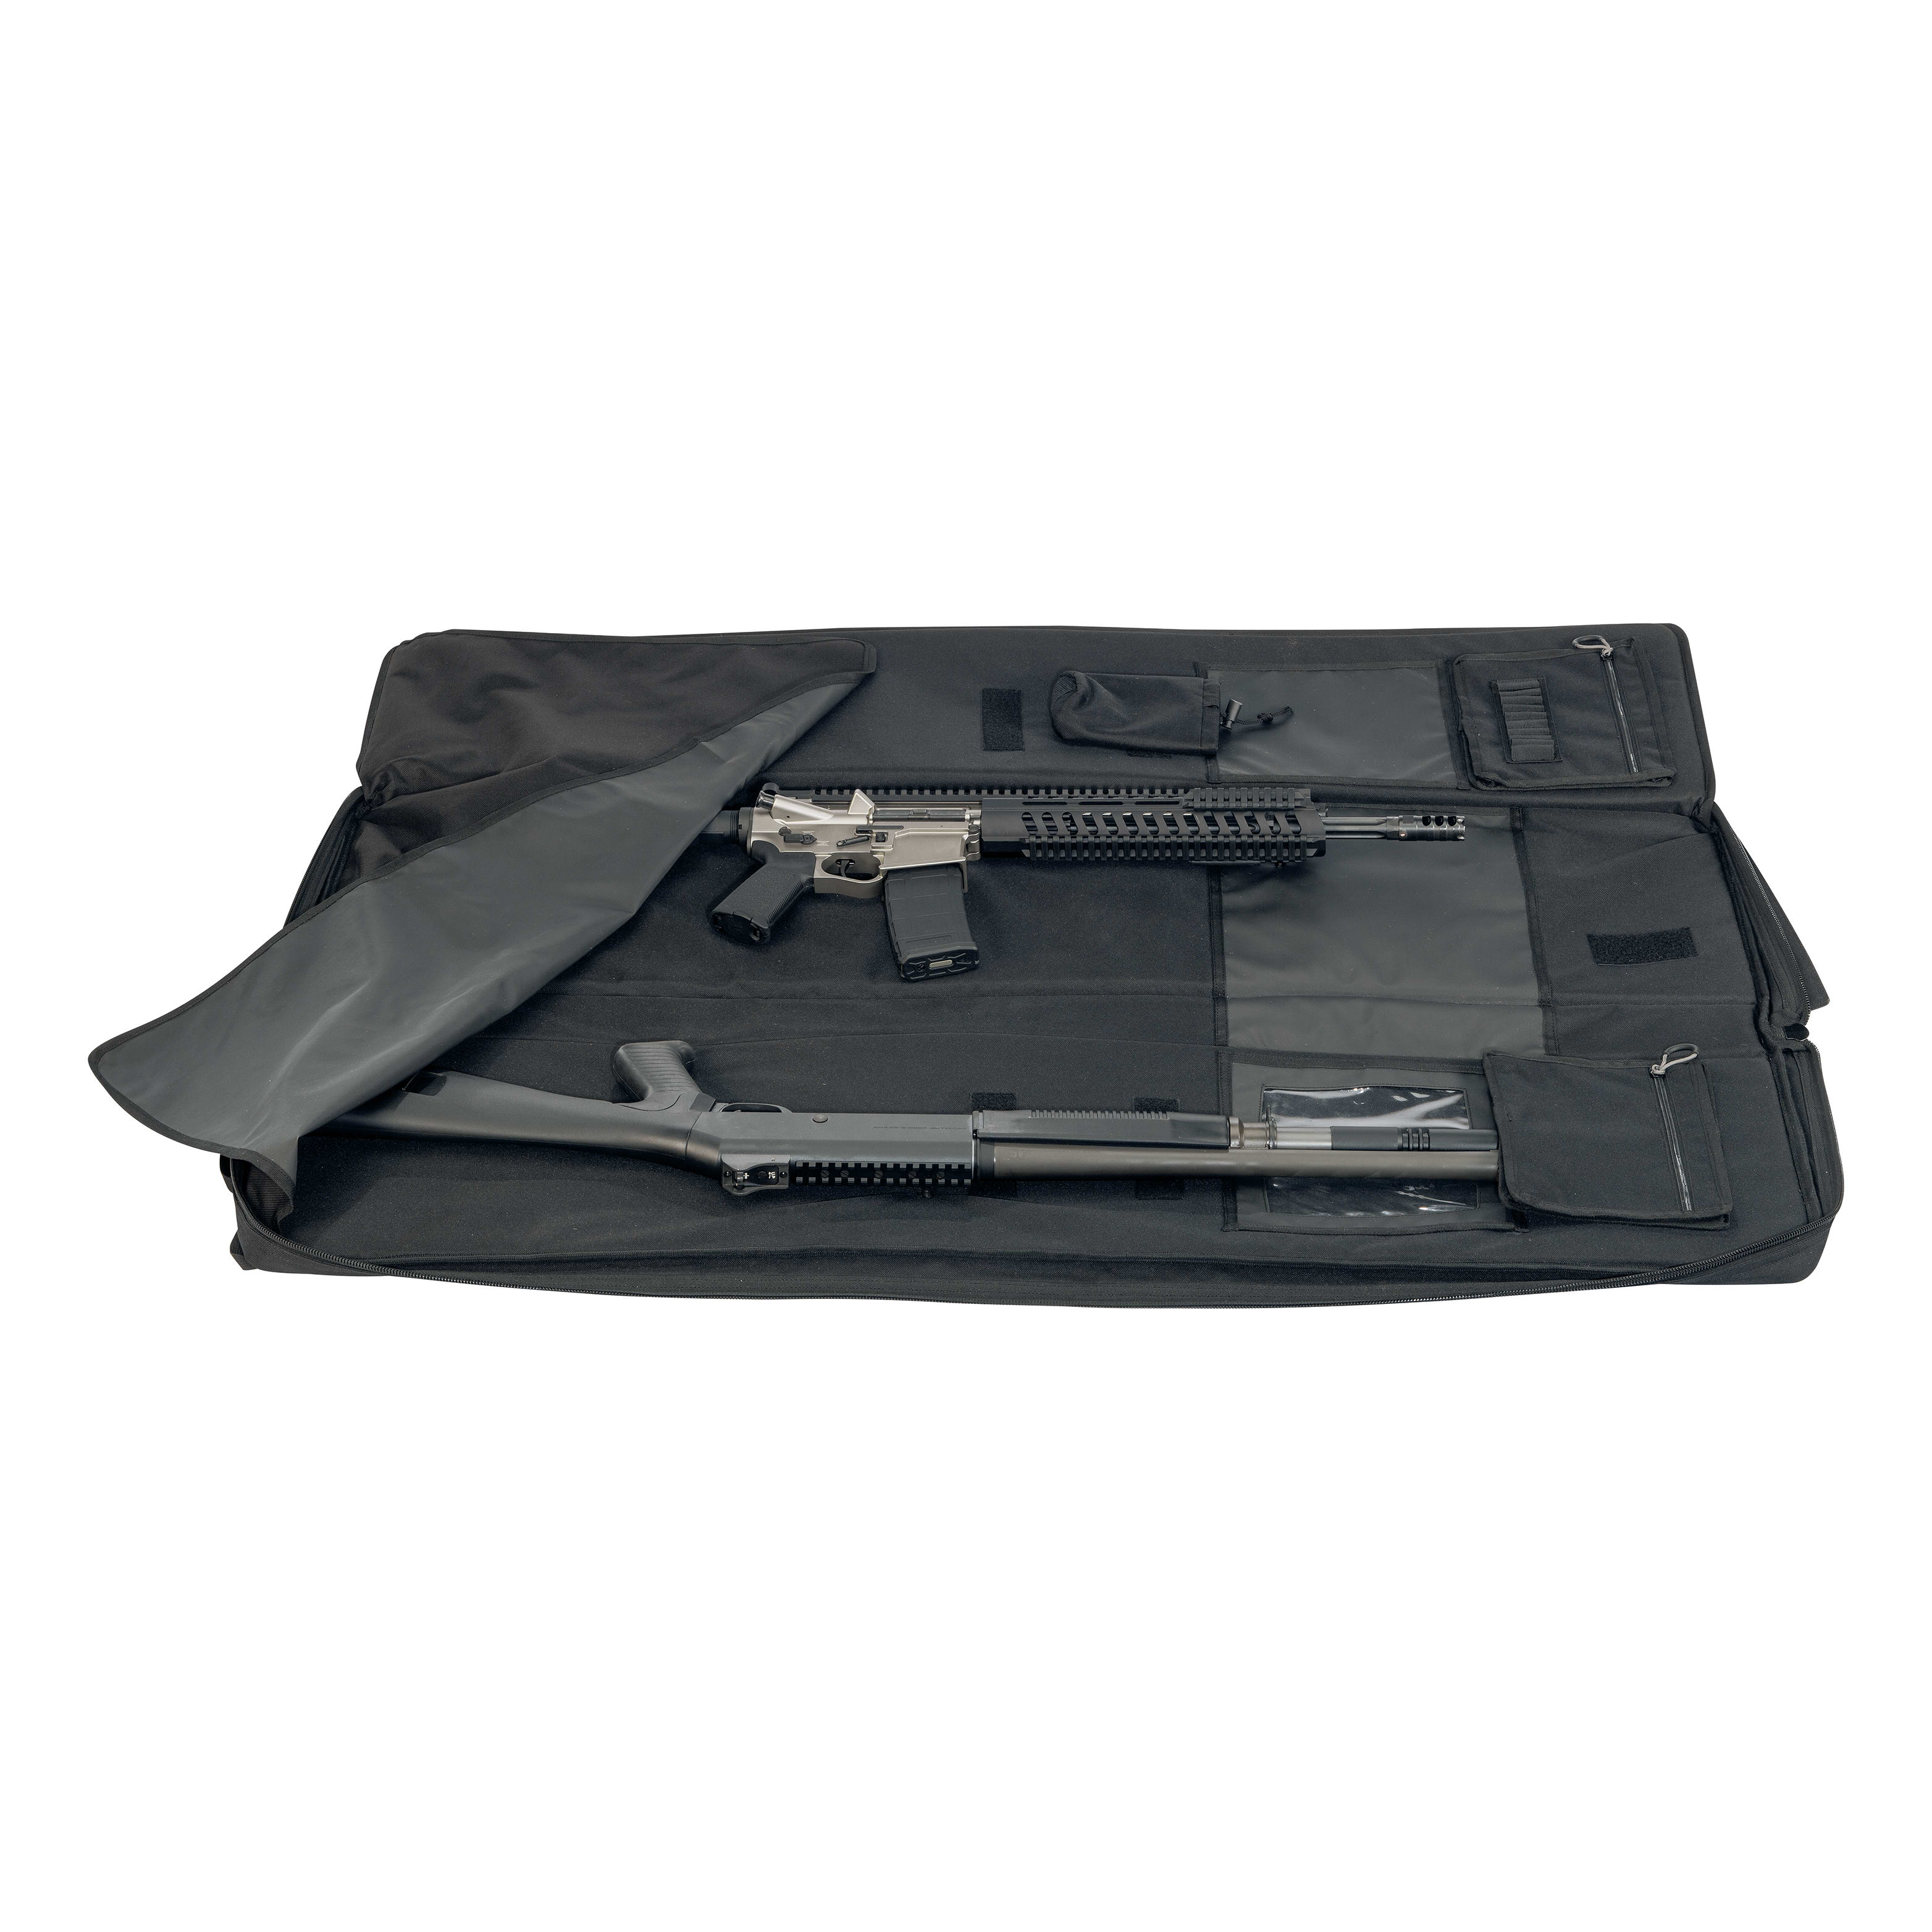 Cabela's Black Mountain Tactical Drag Mat Case - Padded Interior